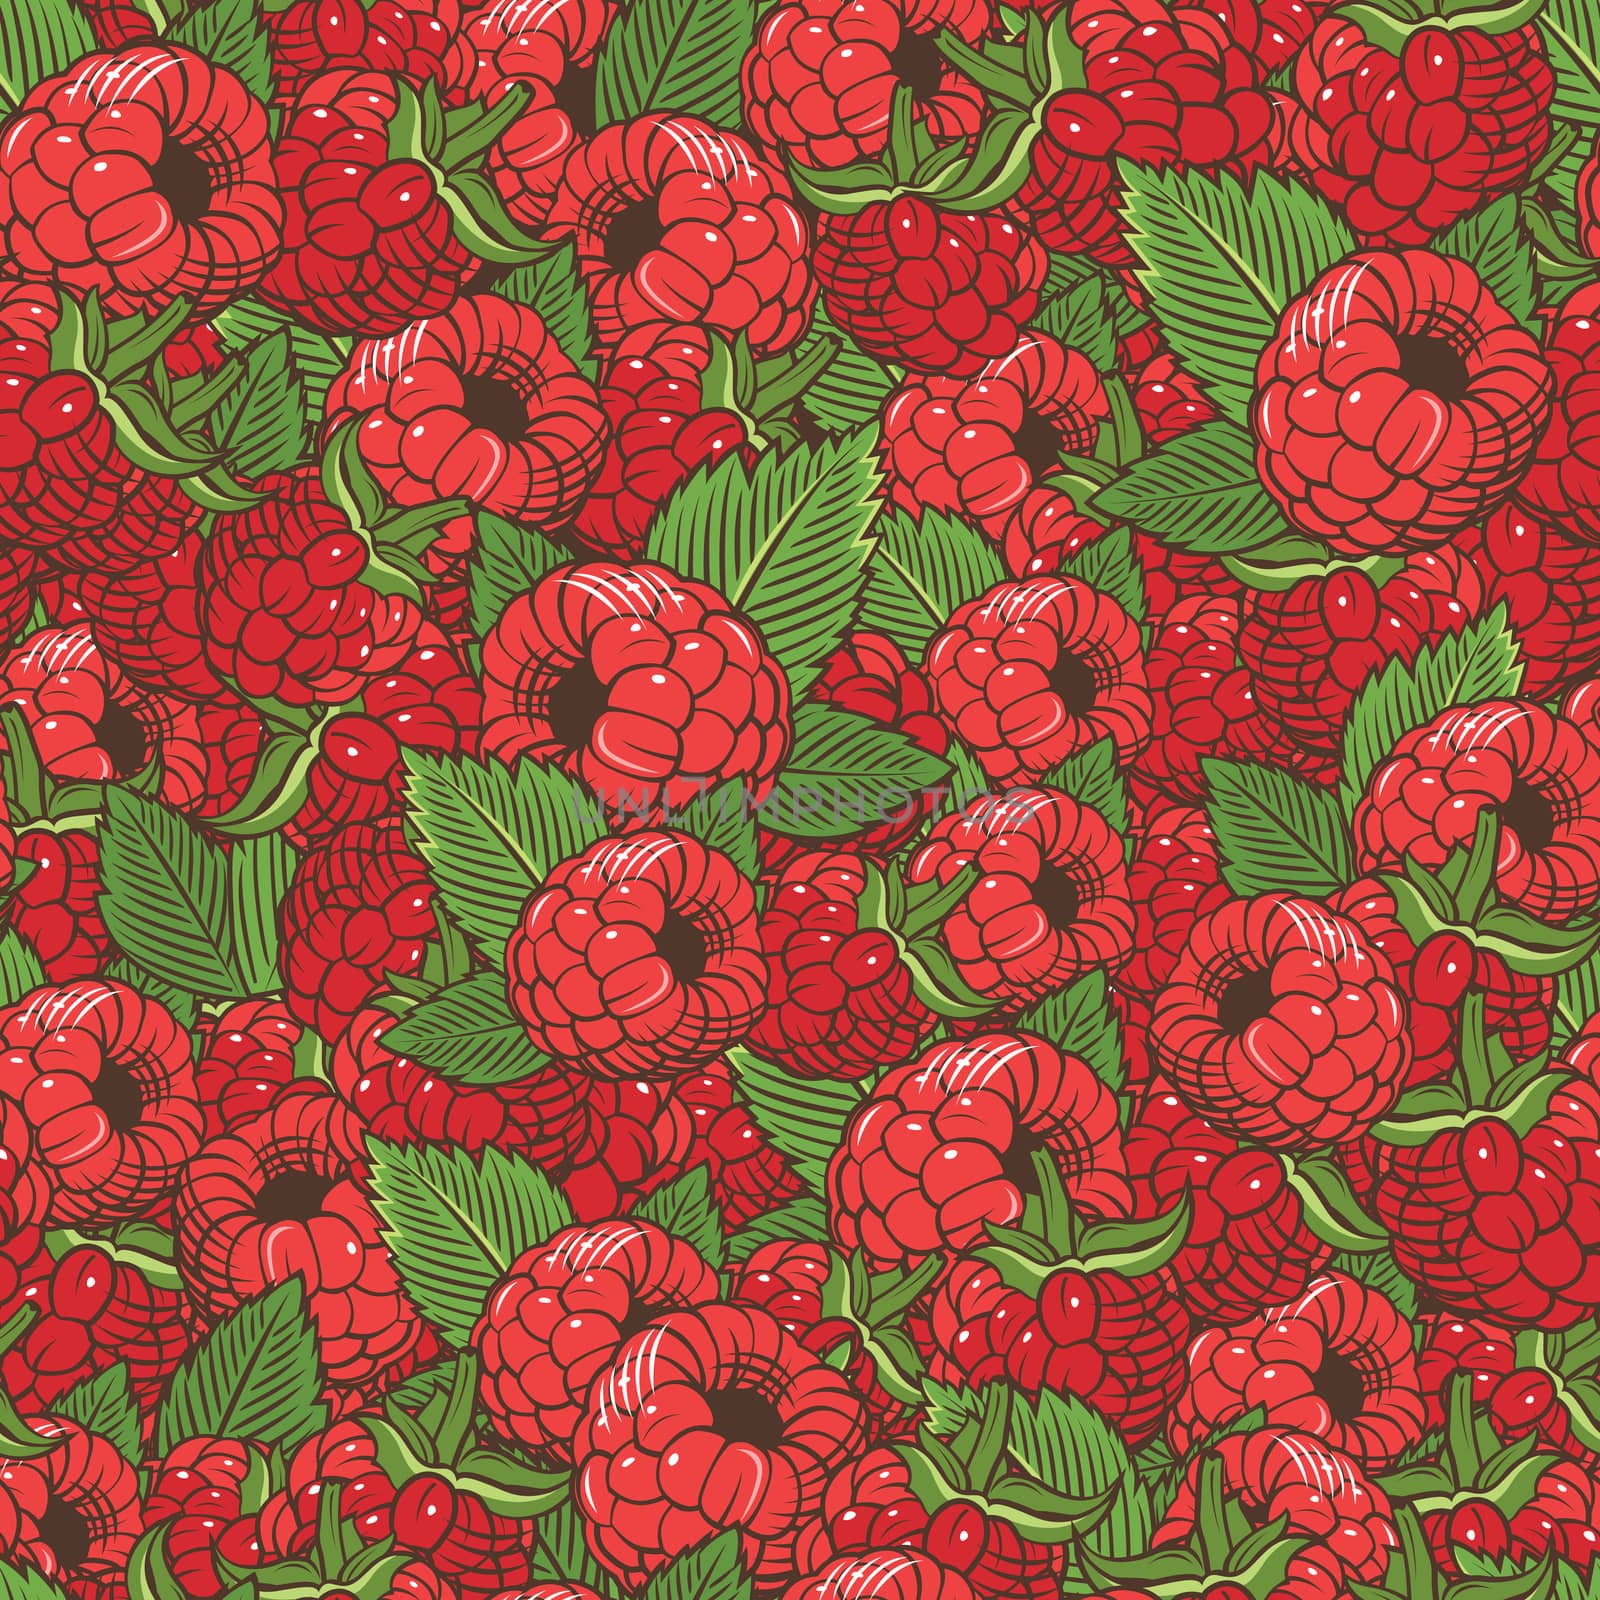 Vintage Raspberries Seamless Pattern by ConceptCafe